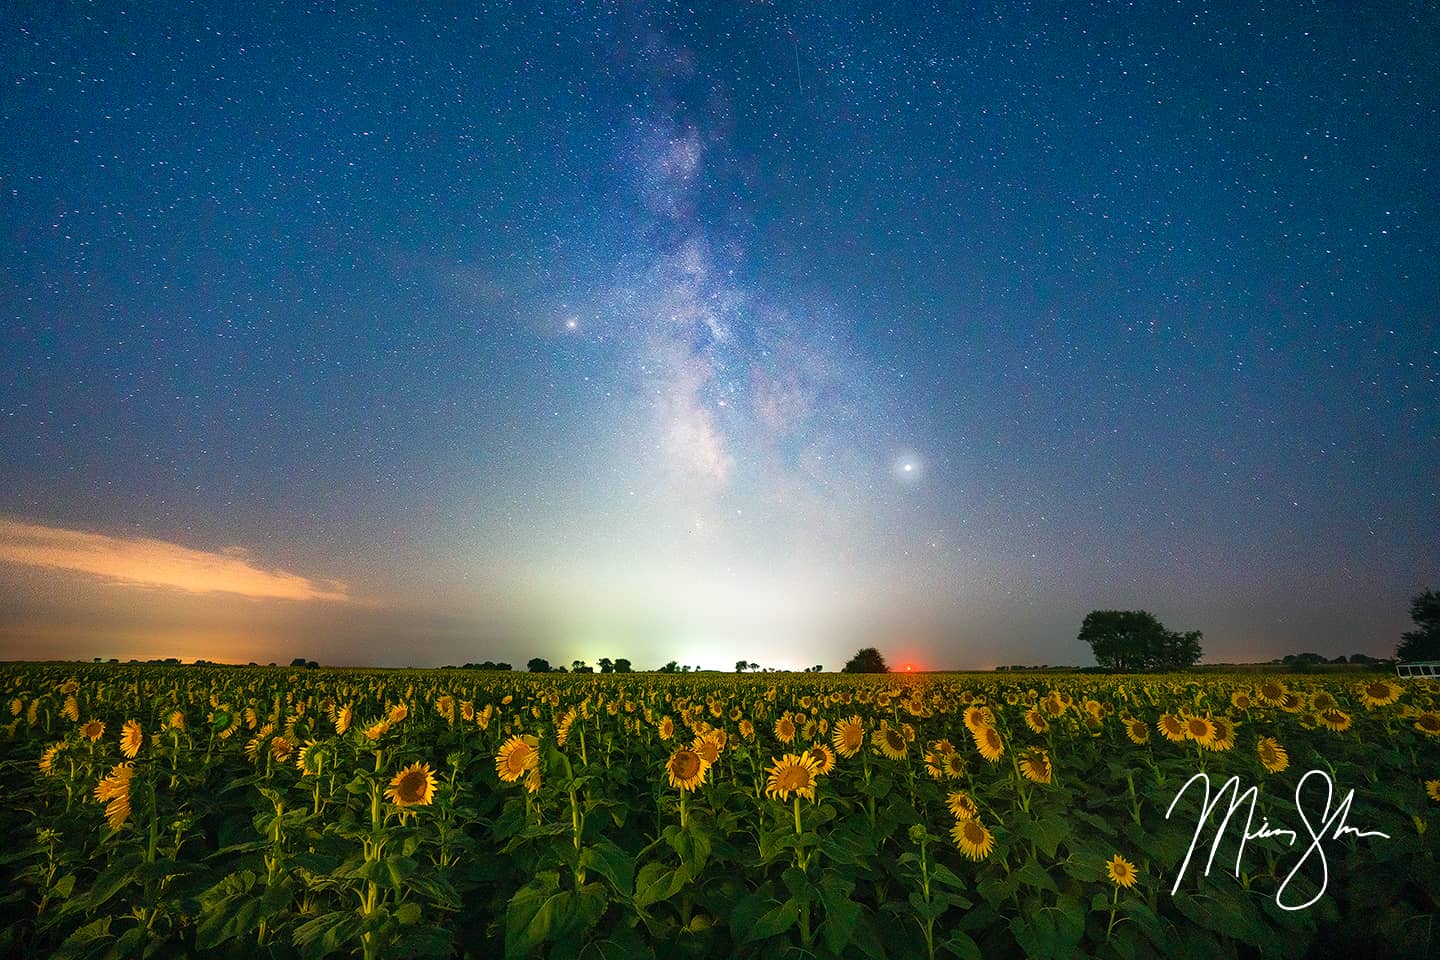 Sunflower Milky Way - Klausmeyer Farm, Clearwater, Kansas